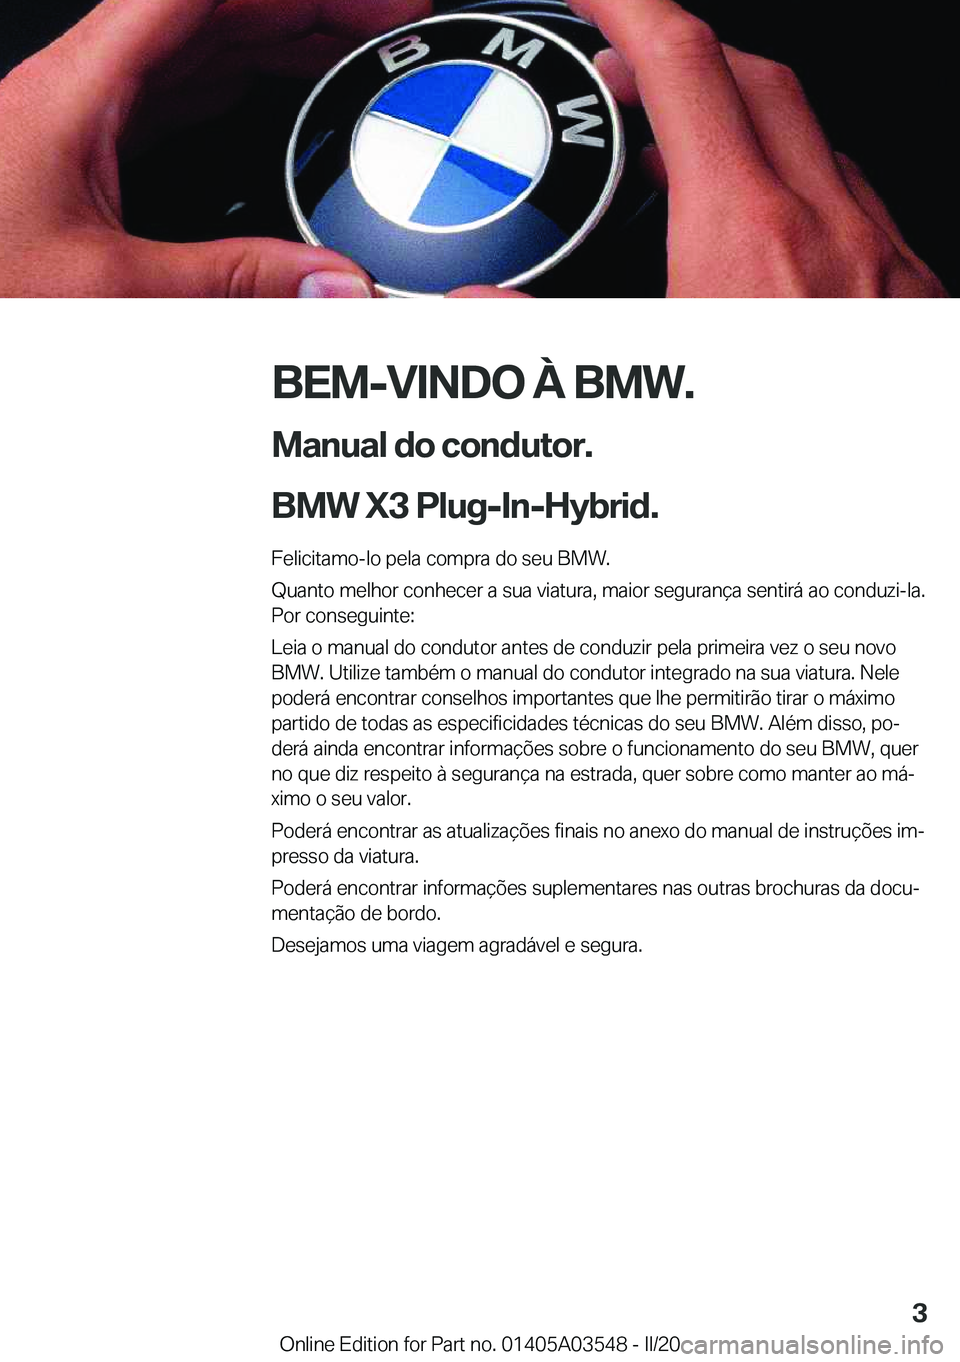 BMW X3 PLUG IN HYBRID 2020  Manual do condutor (in Portuguese) �B�E�M�-�V�I�N�D�O��À��B�M�W�.
�M�a�n�u�a�l��d�o��c�o�n�d�u�t�o�r�.
�B�M�W��X�3��P�l�u�g�-�I�n�-�H�y�b�r�i�d�. �F�e�l�i�c�i�t�a�m�o�-�l�o��p�e�l�a��c�o�m�p�r�a��d�o��s�e�u��B�M�W�.�Q�u�a�n